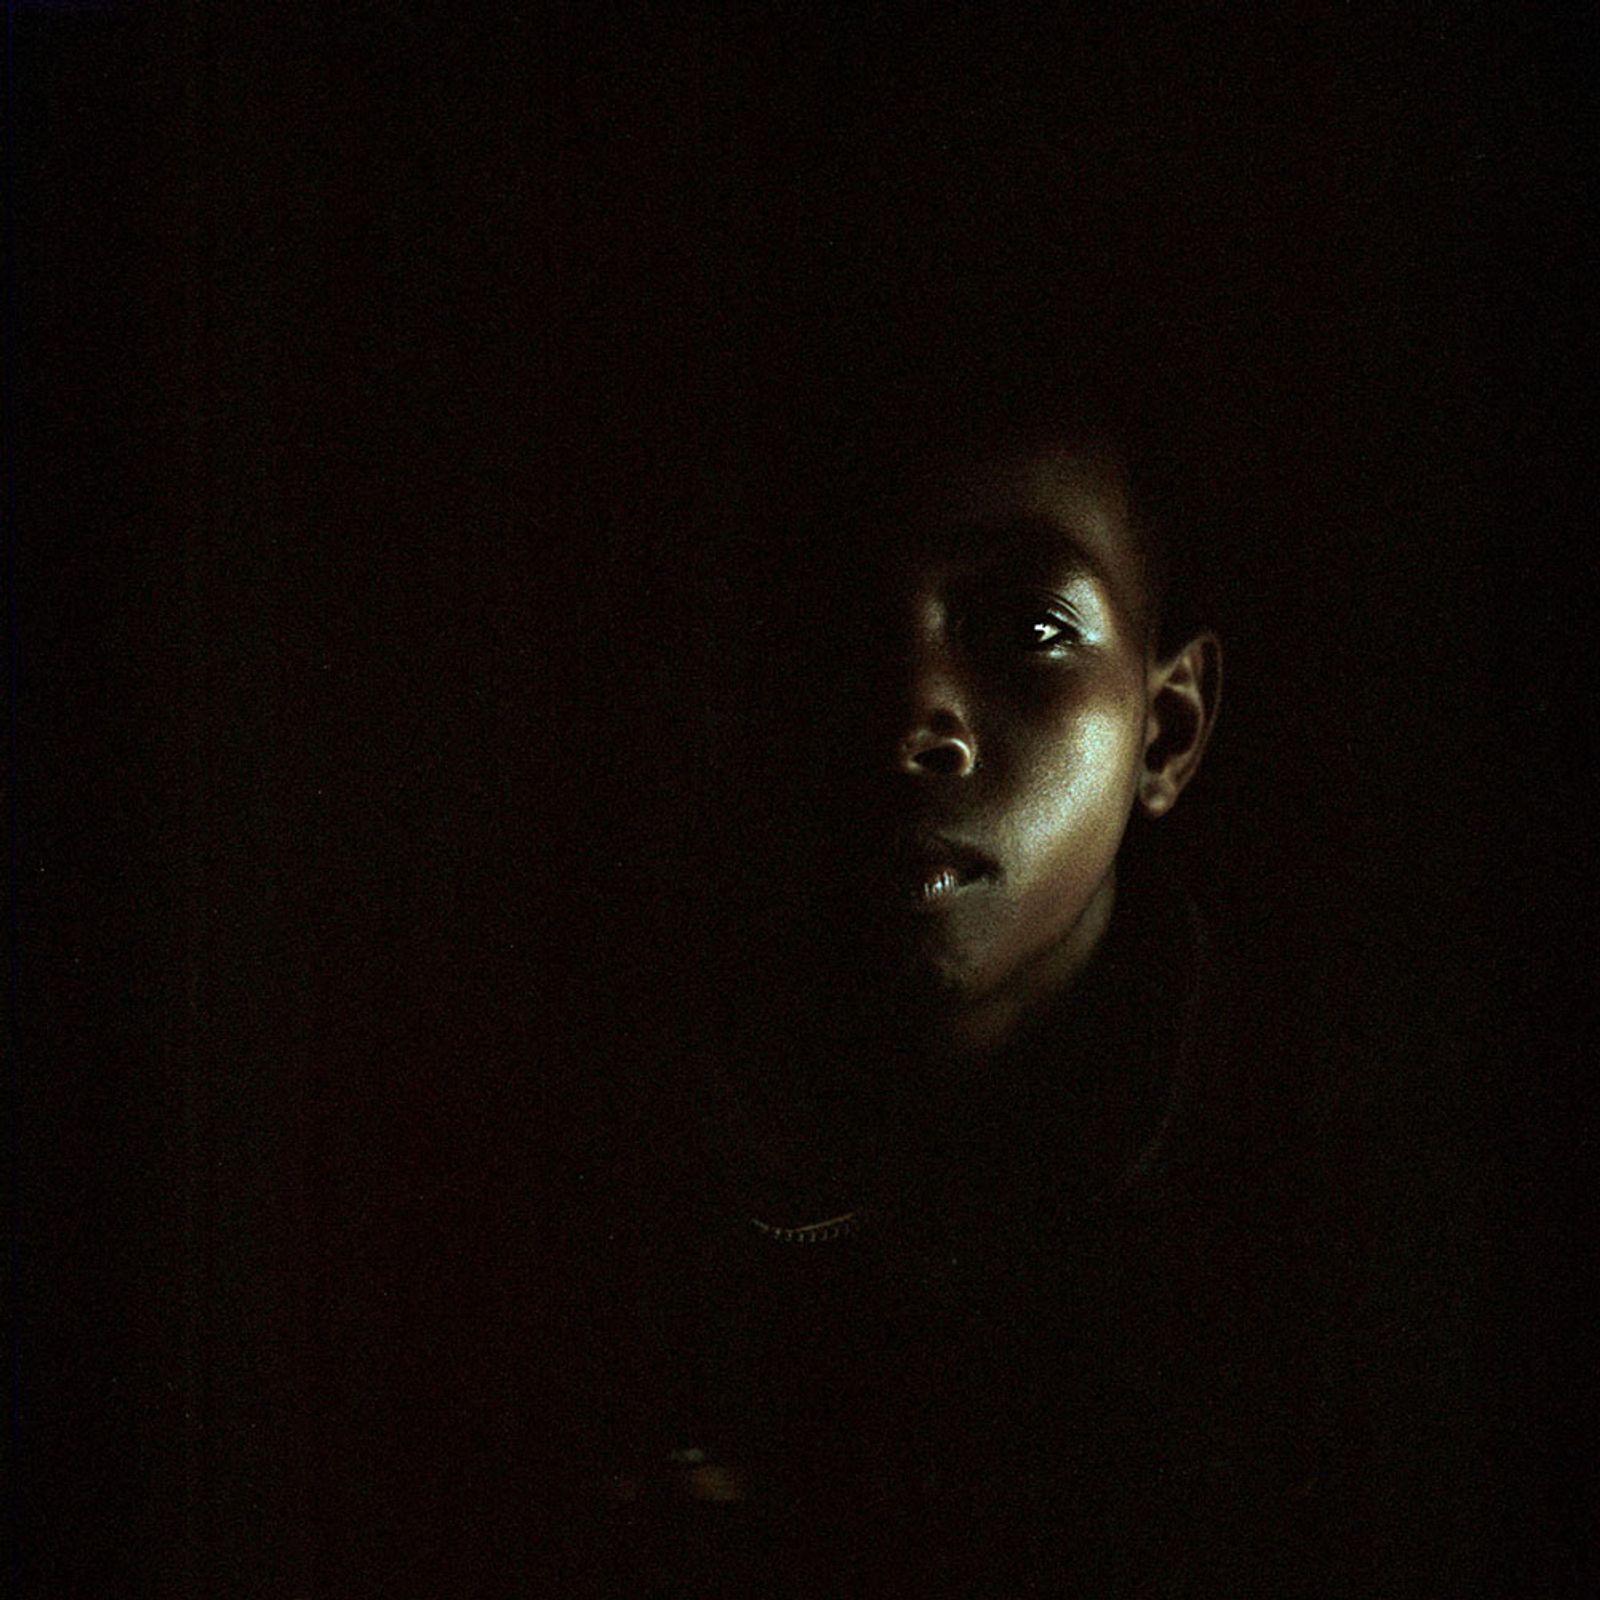 © Cynthia MaiWa Sitei - Image from the Wundanyi photography project